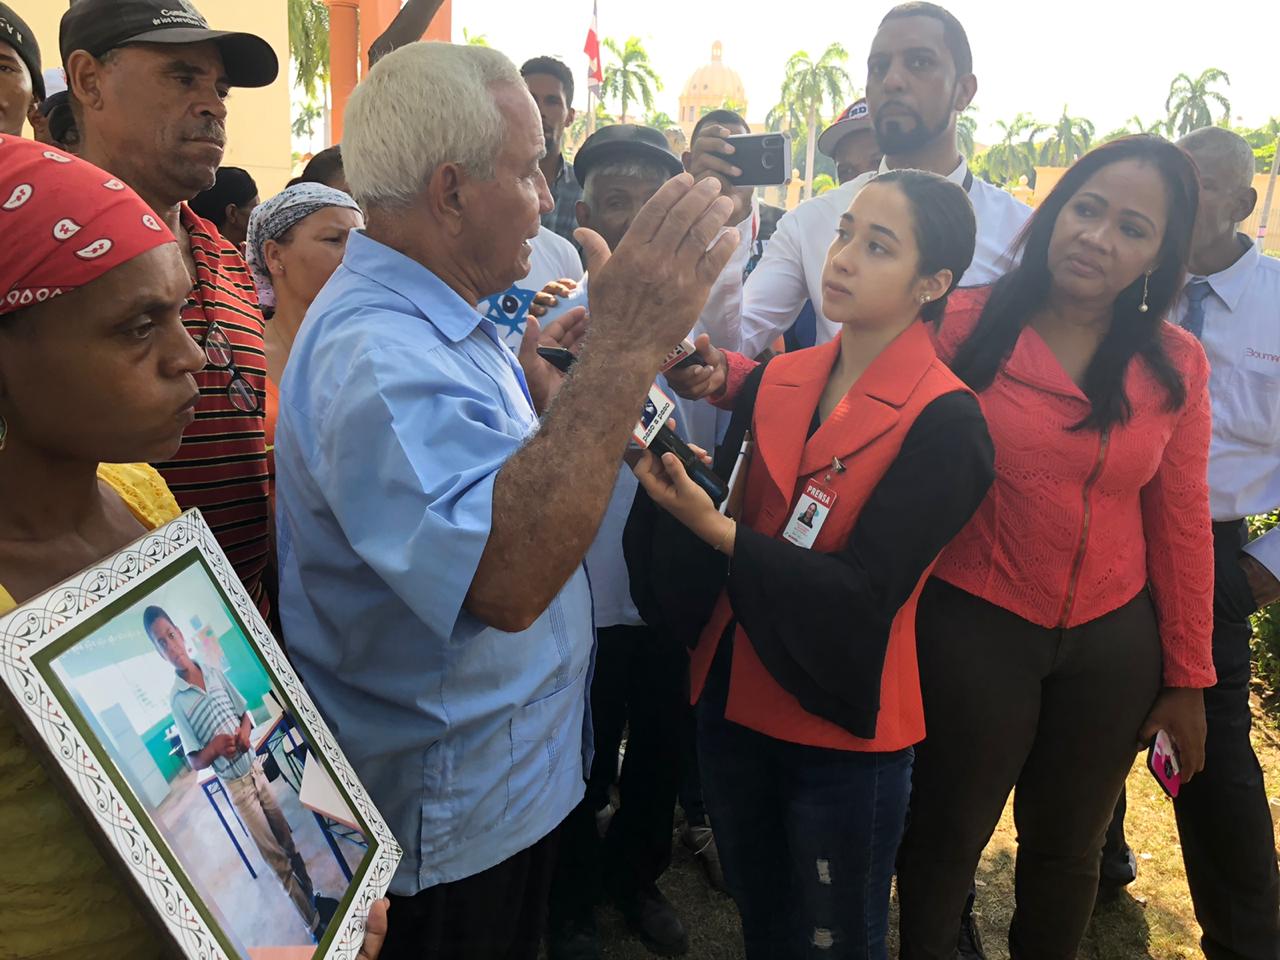 República Dominicana: caminata campesina de 9 días exige tierras a Medina